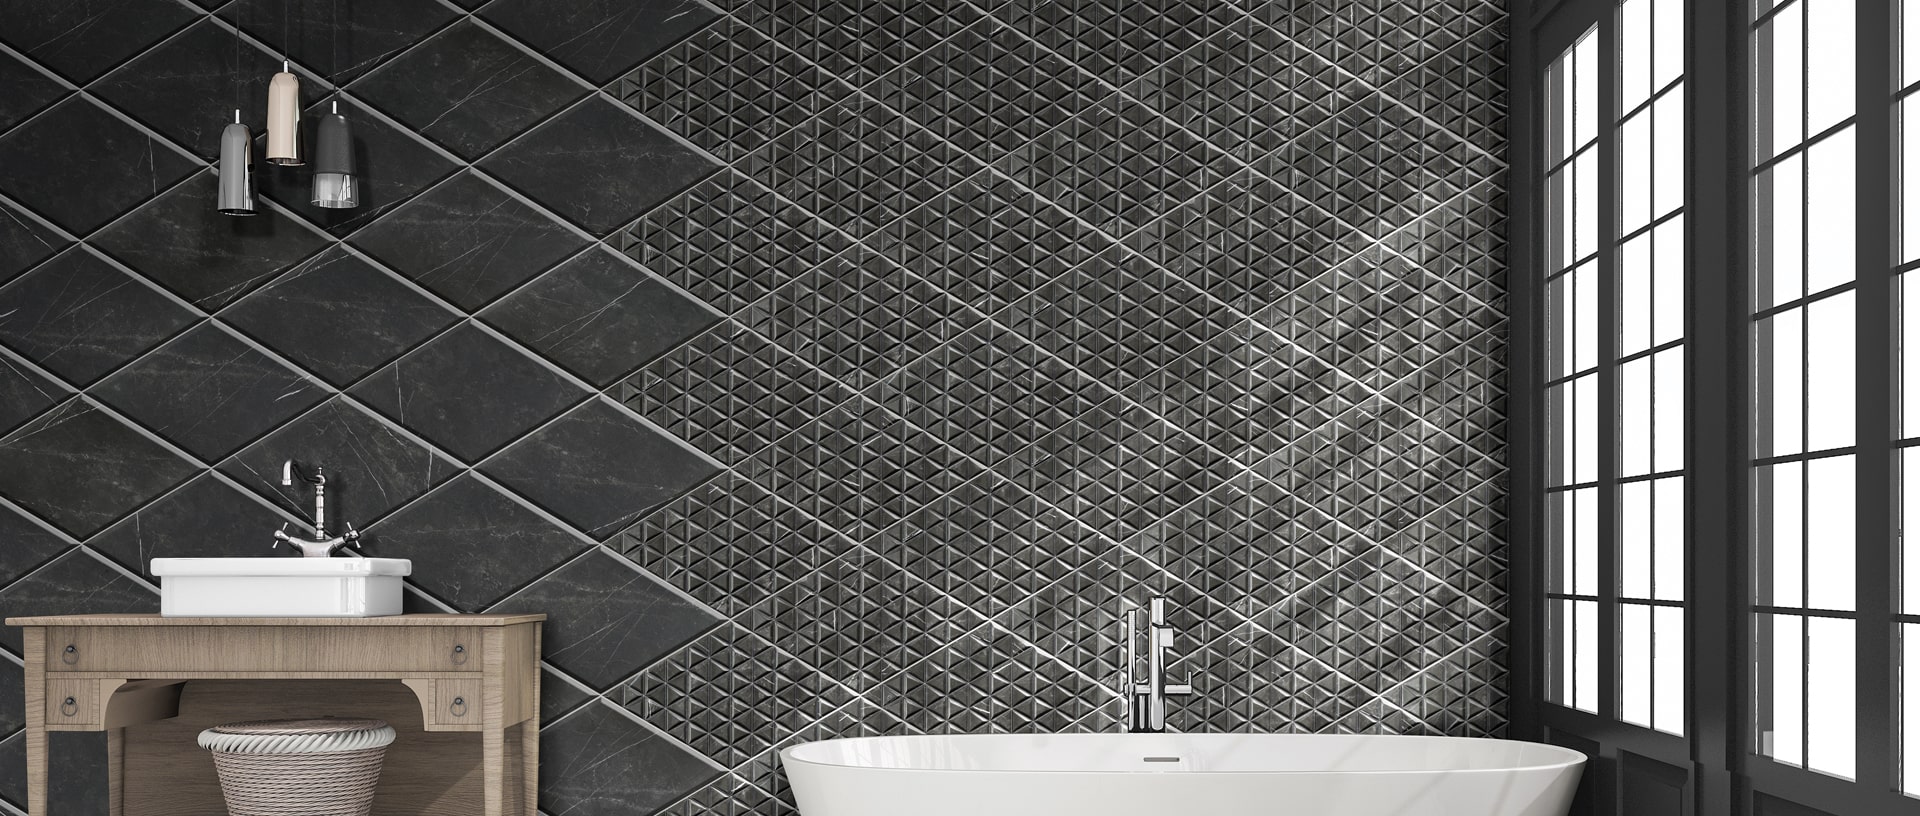 Floor Wall Tiles Brisbane Inspiring, Bathroom Floor Tiles Ideas Australia